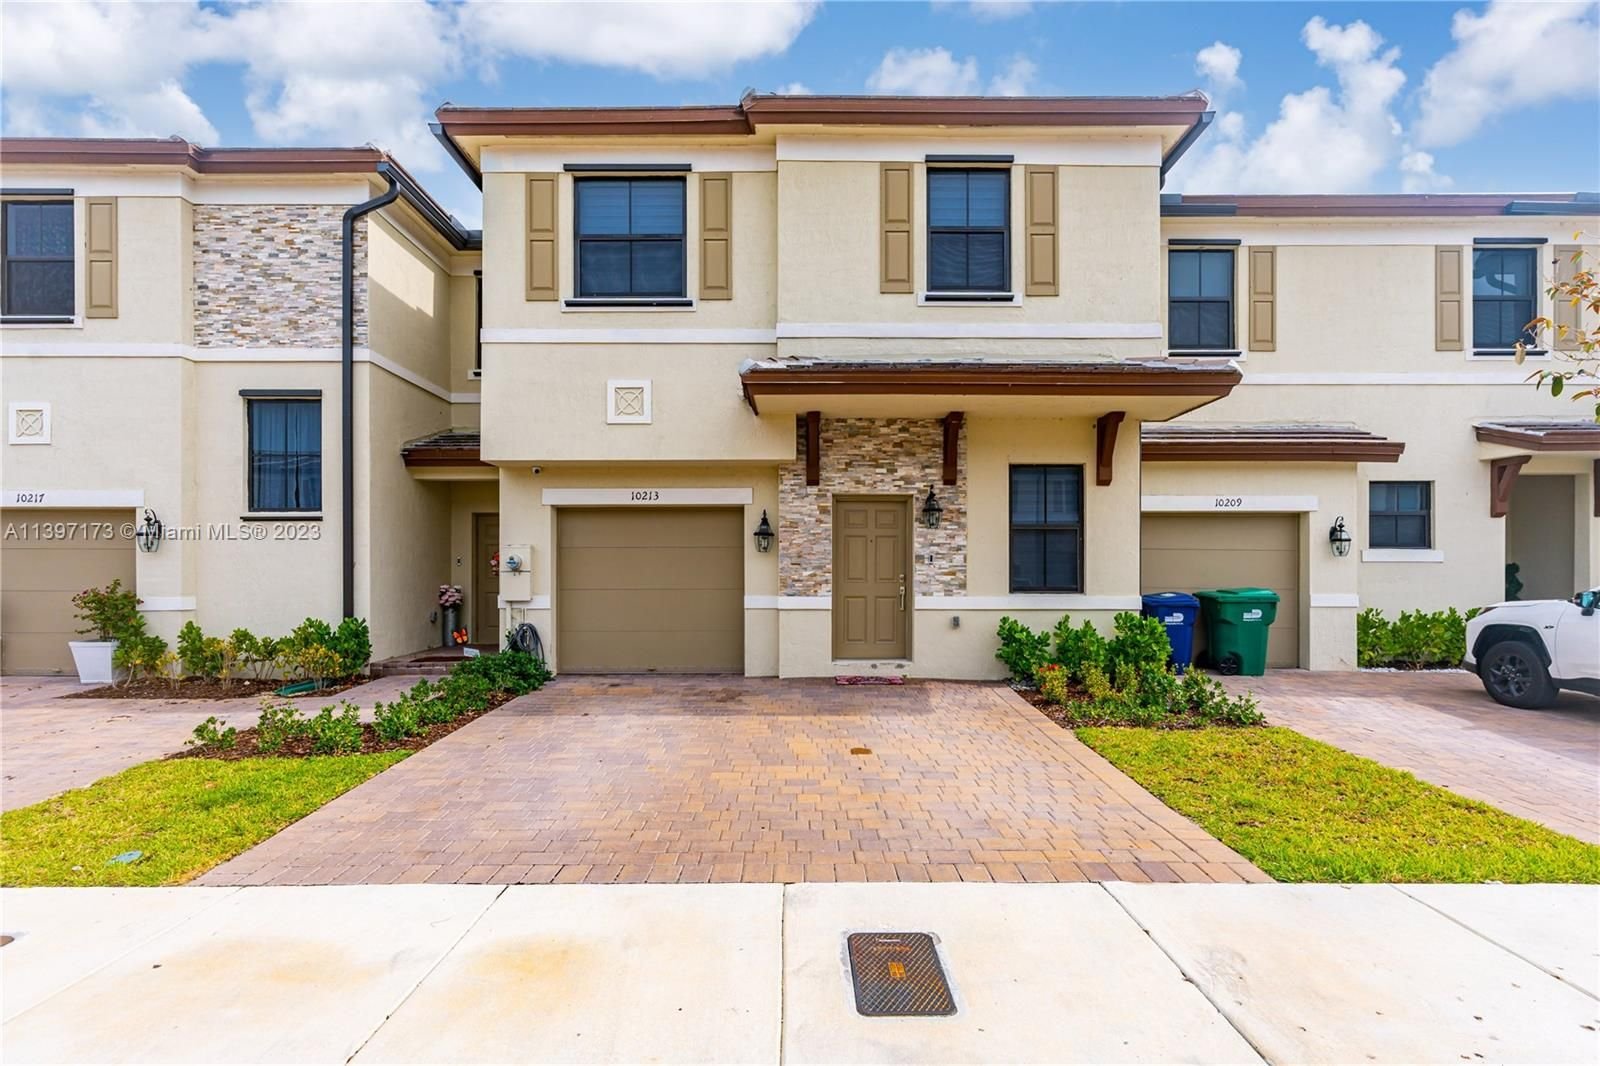 Real estate property located at 10213 231st Ln, Miami-Dade County, Miami, FL